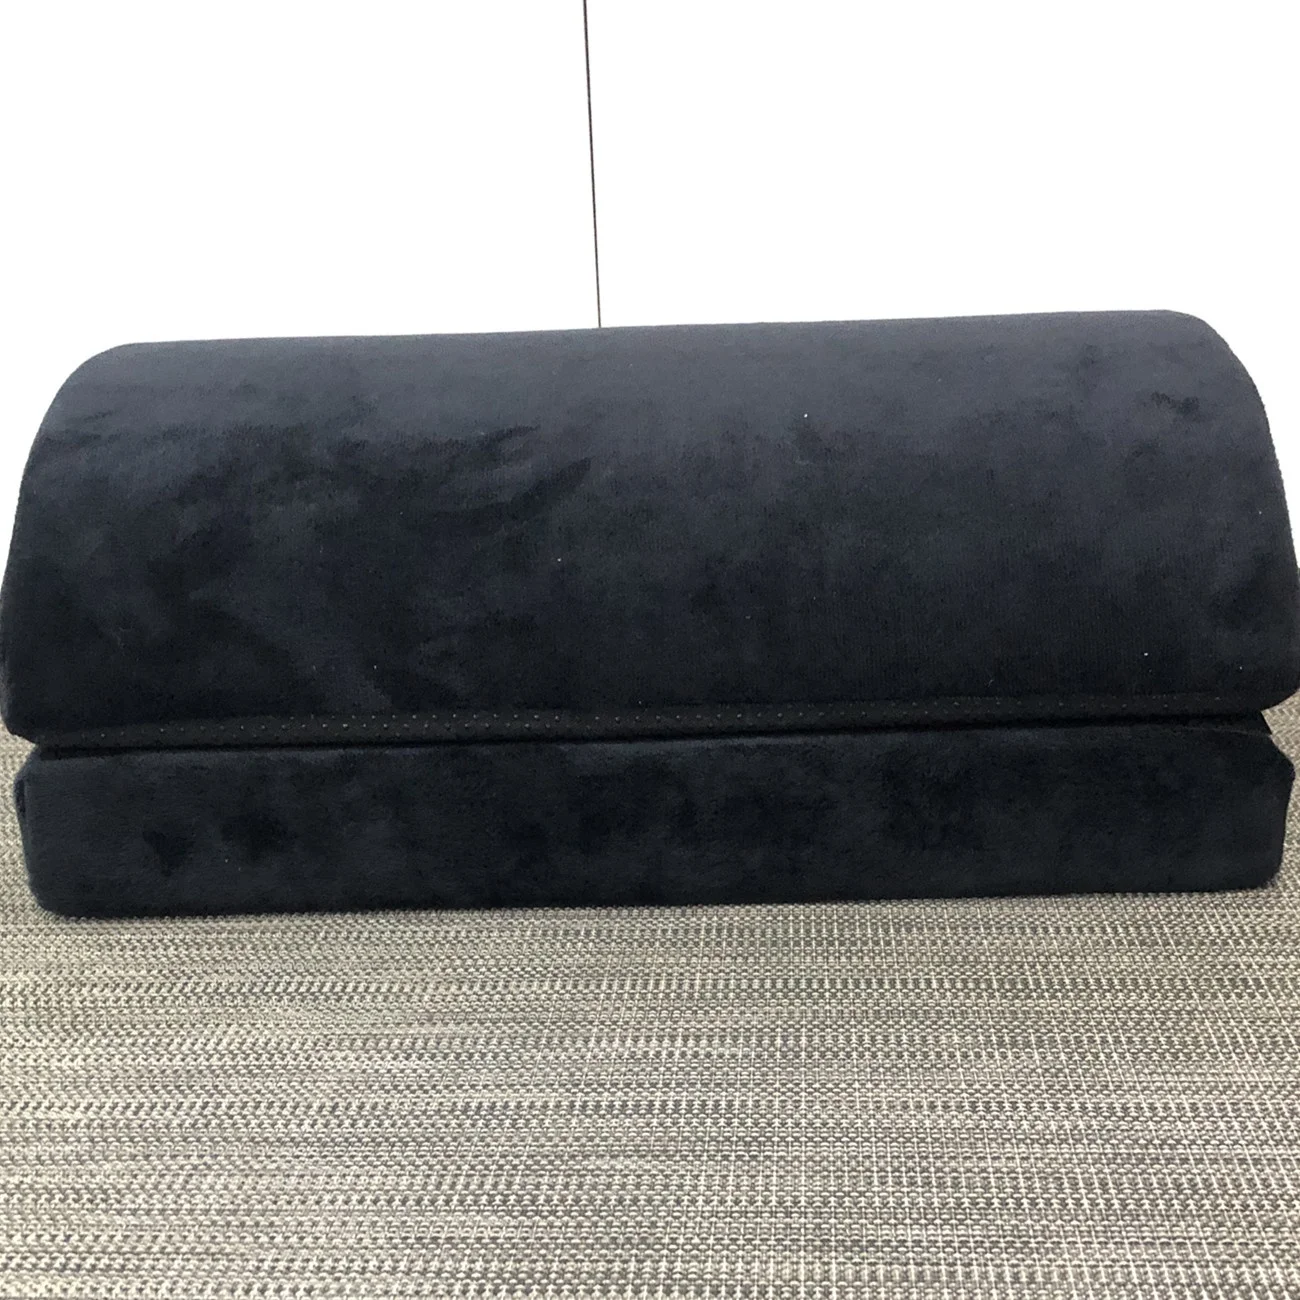 ZNZ soft foot rest under desk chair high density leg cushion sponge (1600173508471)